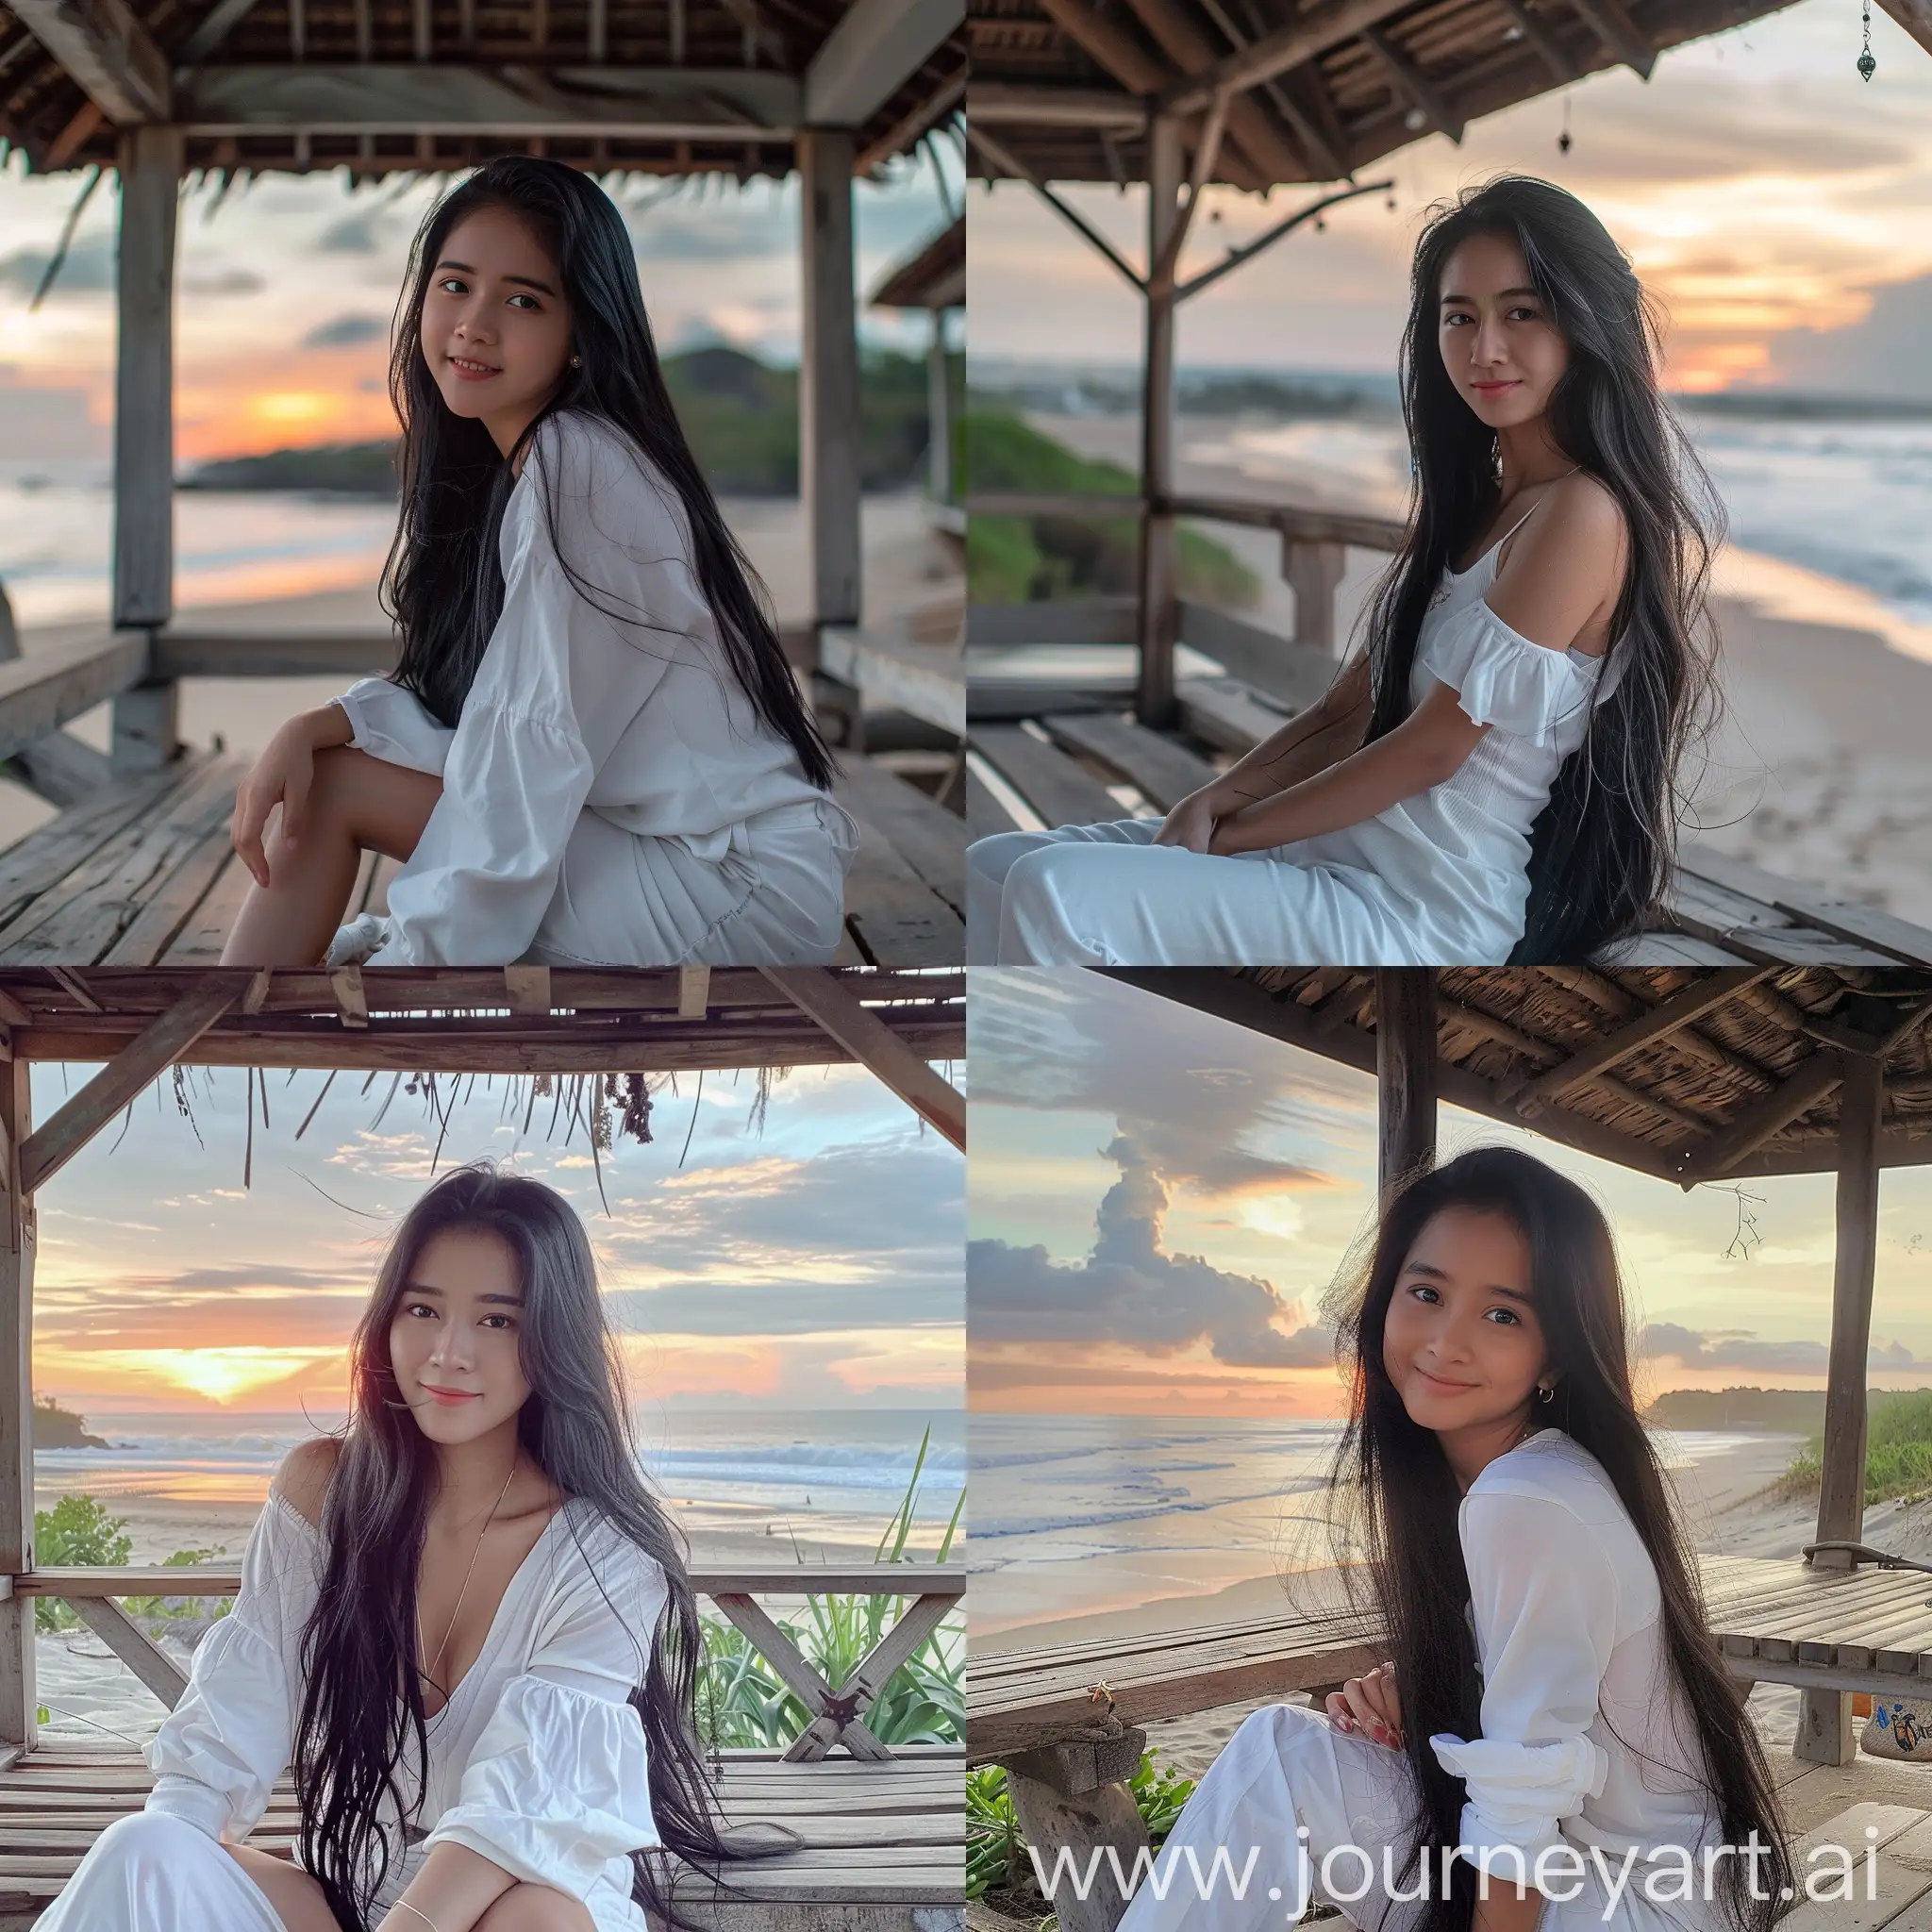 Indonesian-Girl-Enjoying-Sunset-on-Wooden-Gazebo-at-Beach